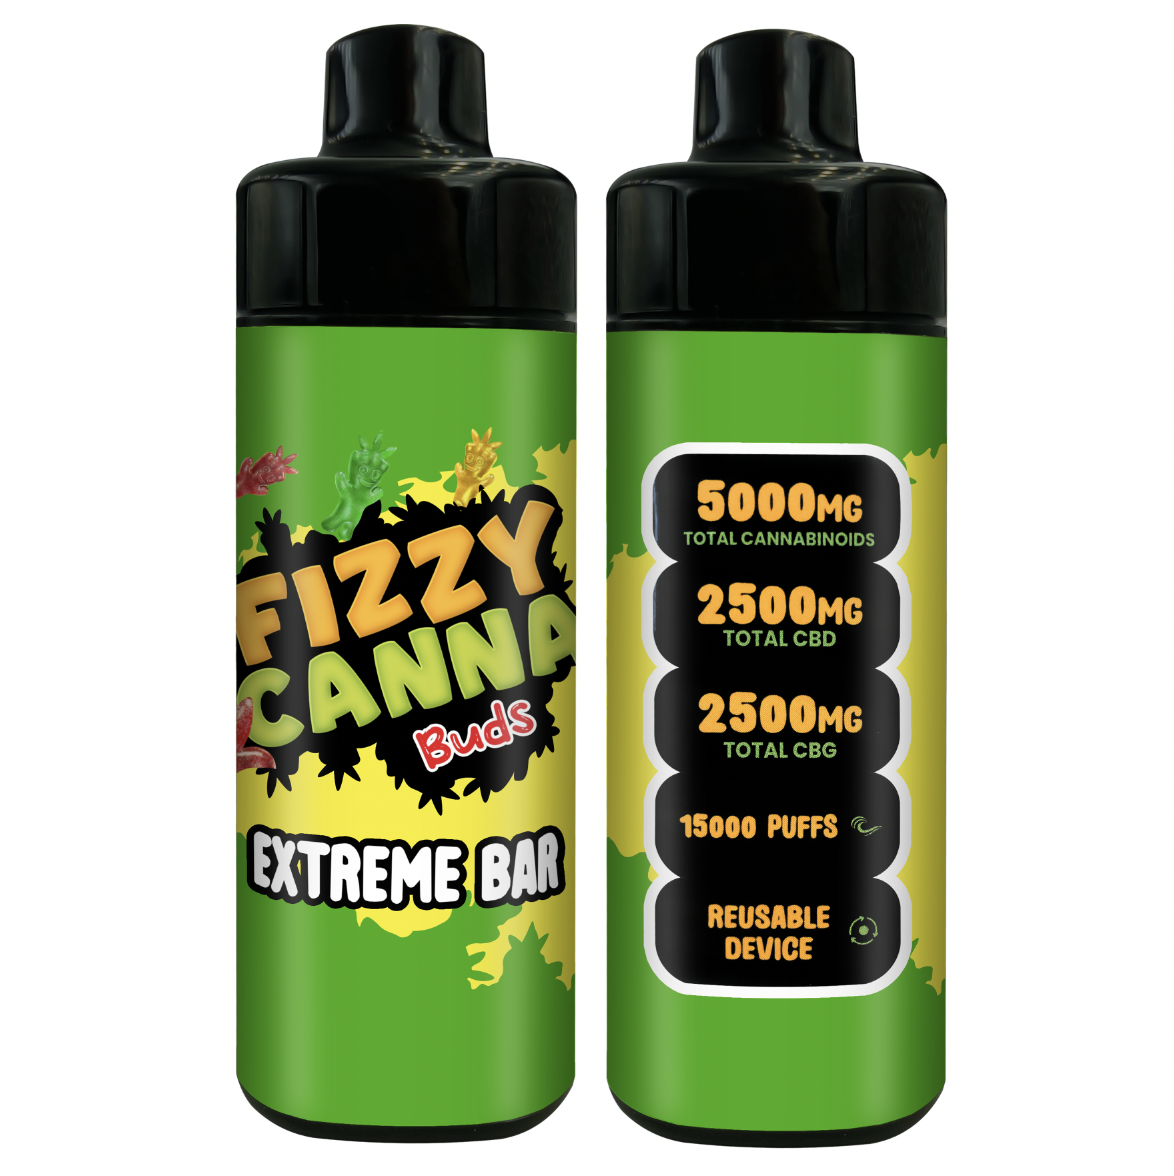 Fizzy Canna Buds Extreme Bar 5000mg 15,000 Puffs